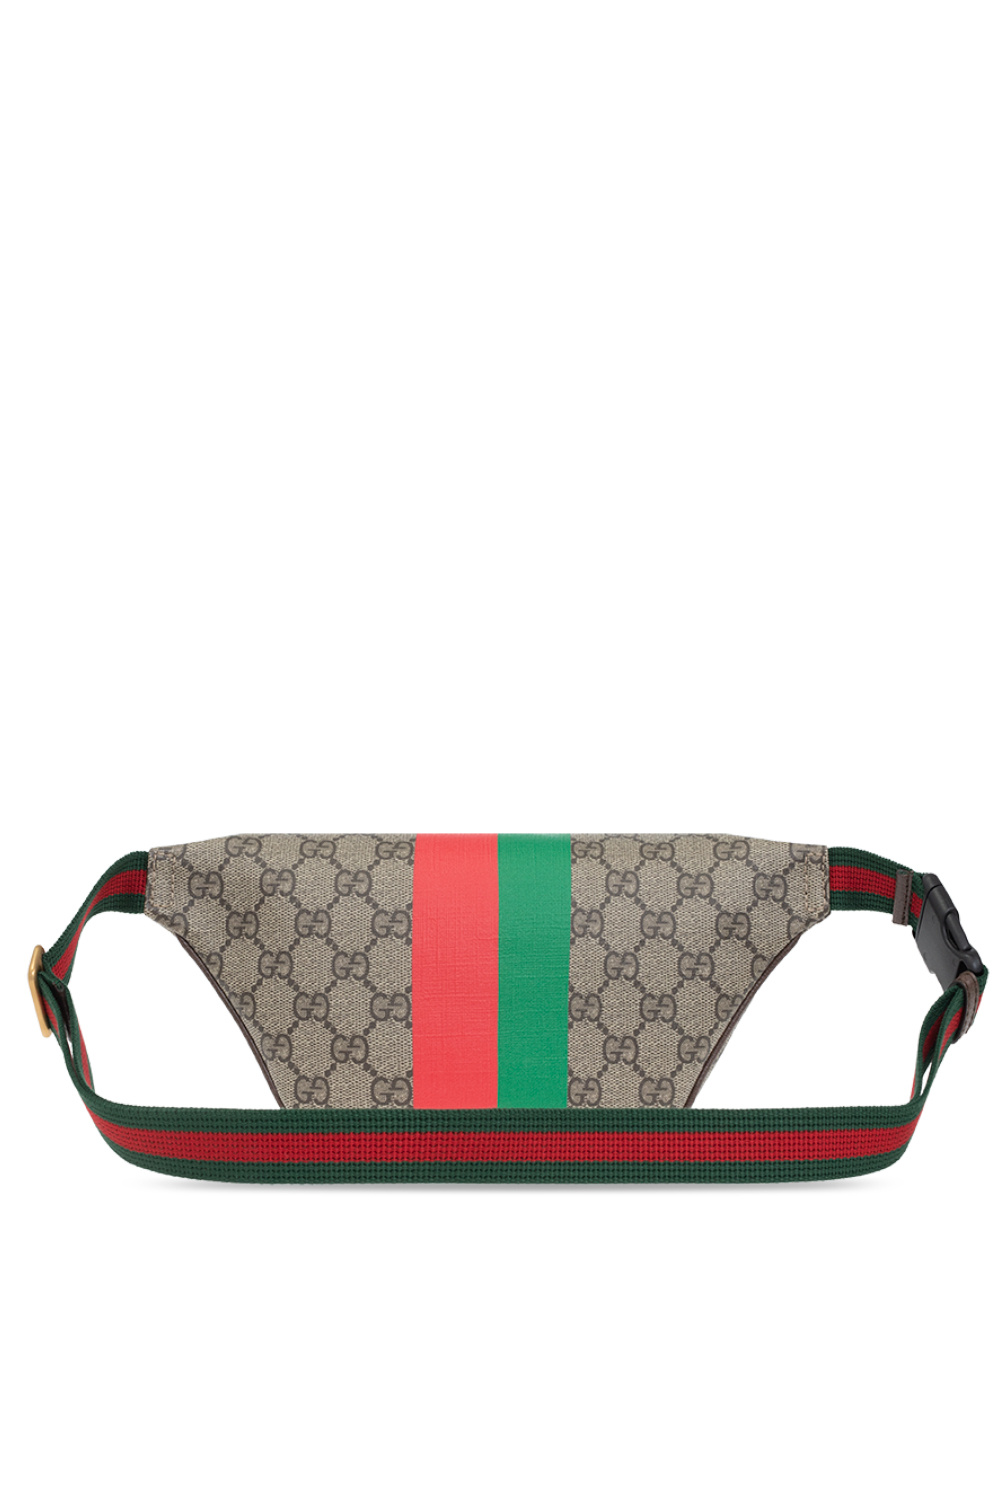 Dolce & Gabbana Belt Bag With Leopard Print In Green